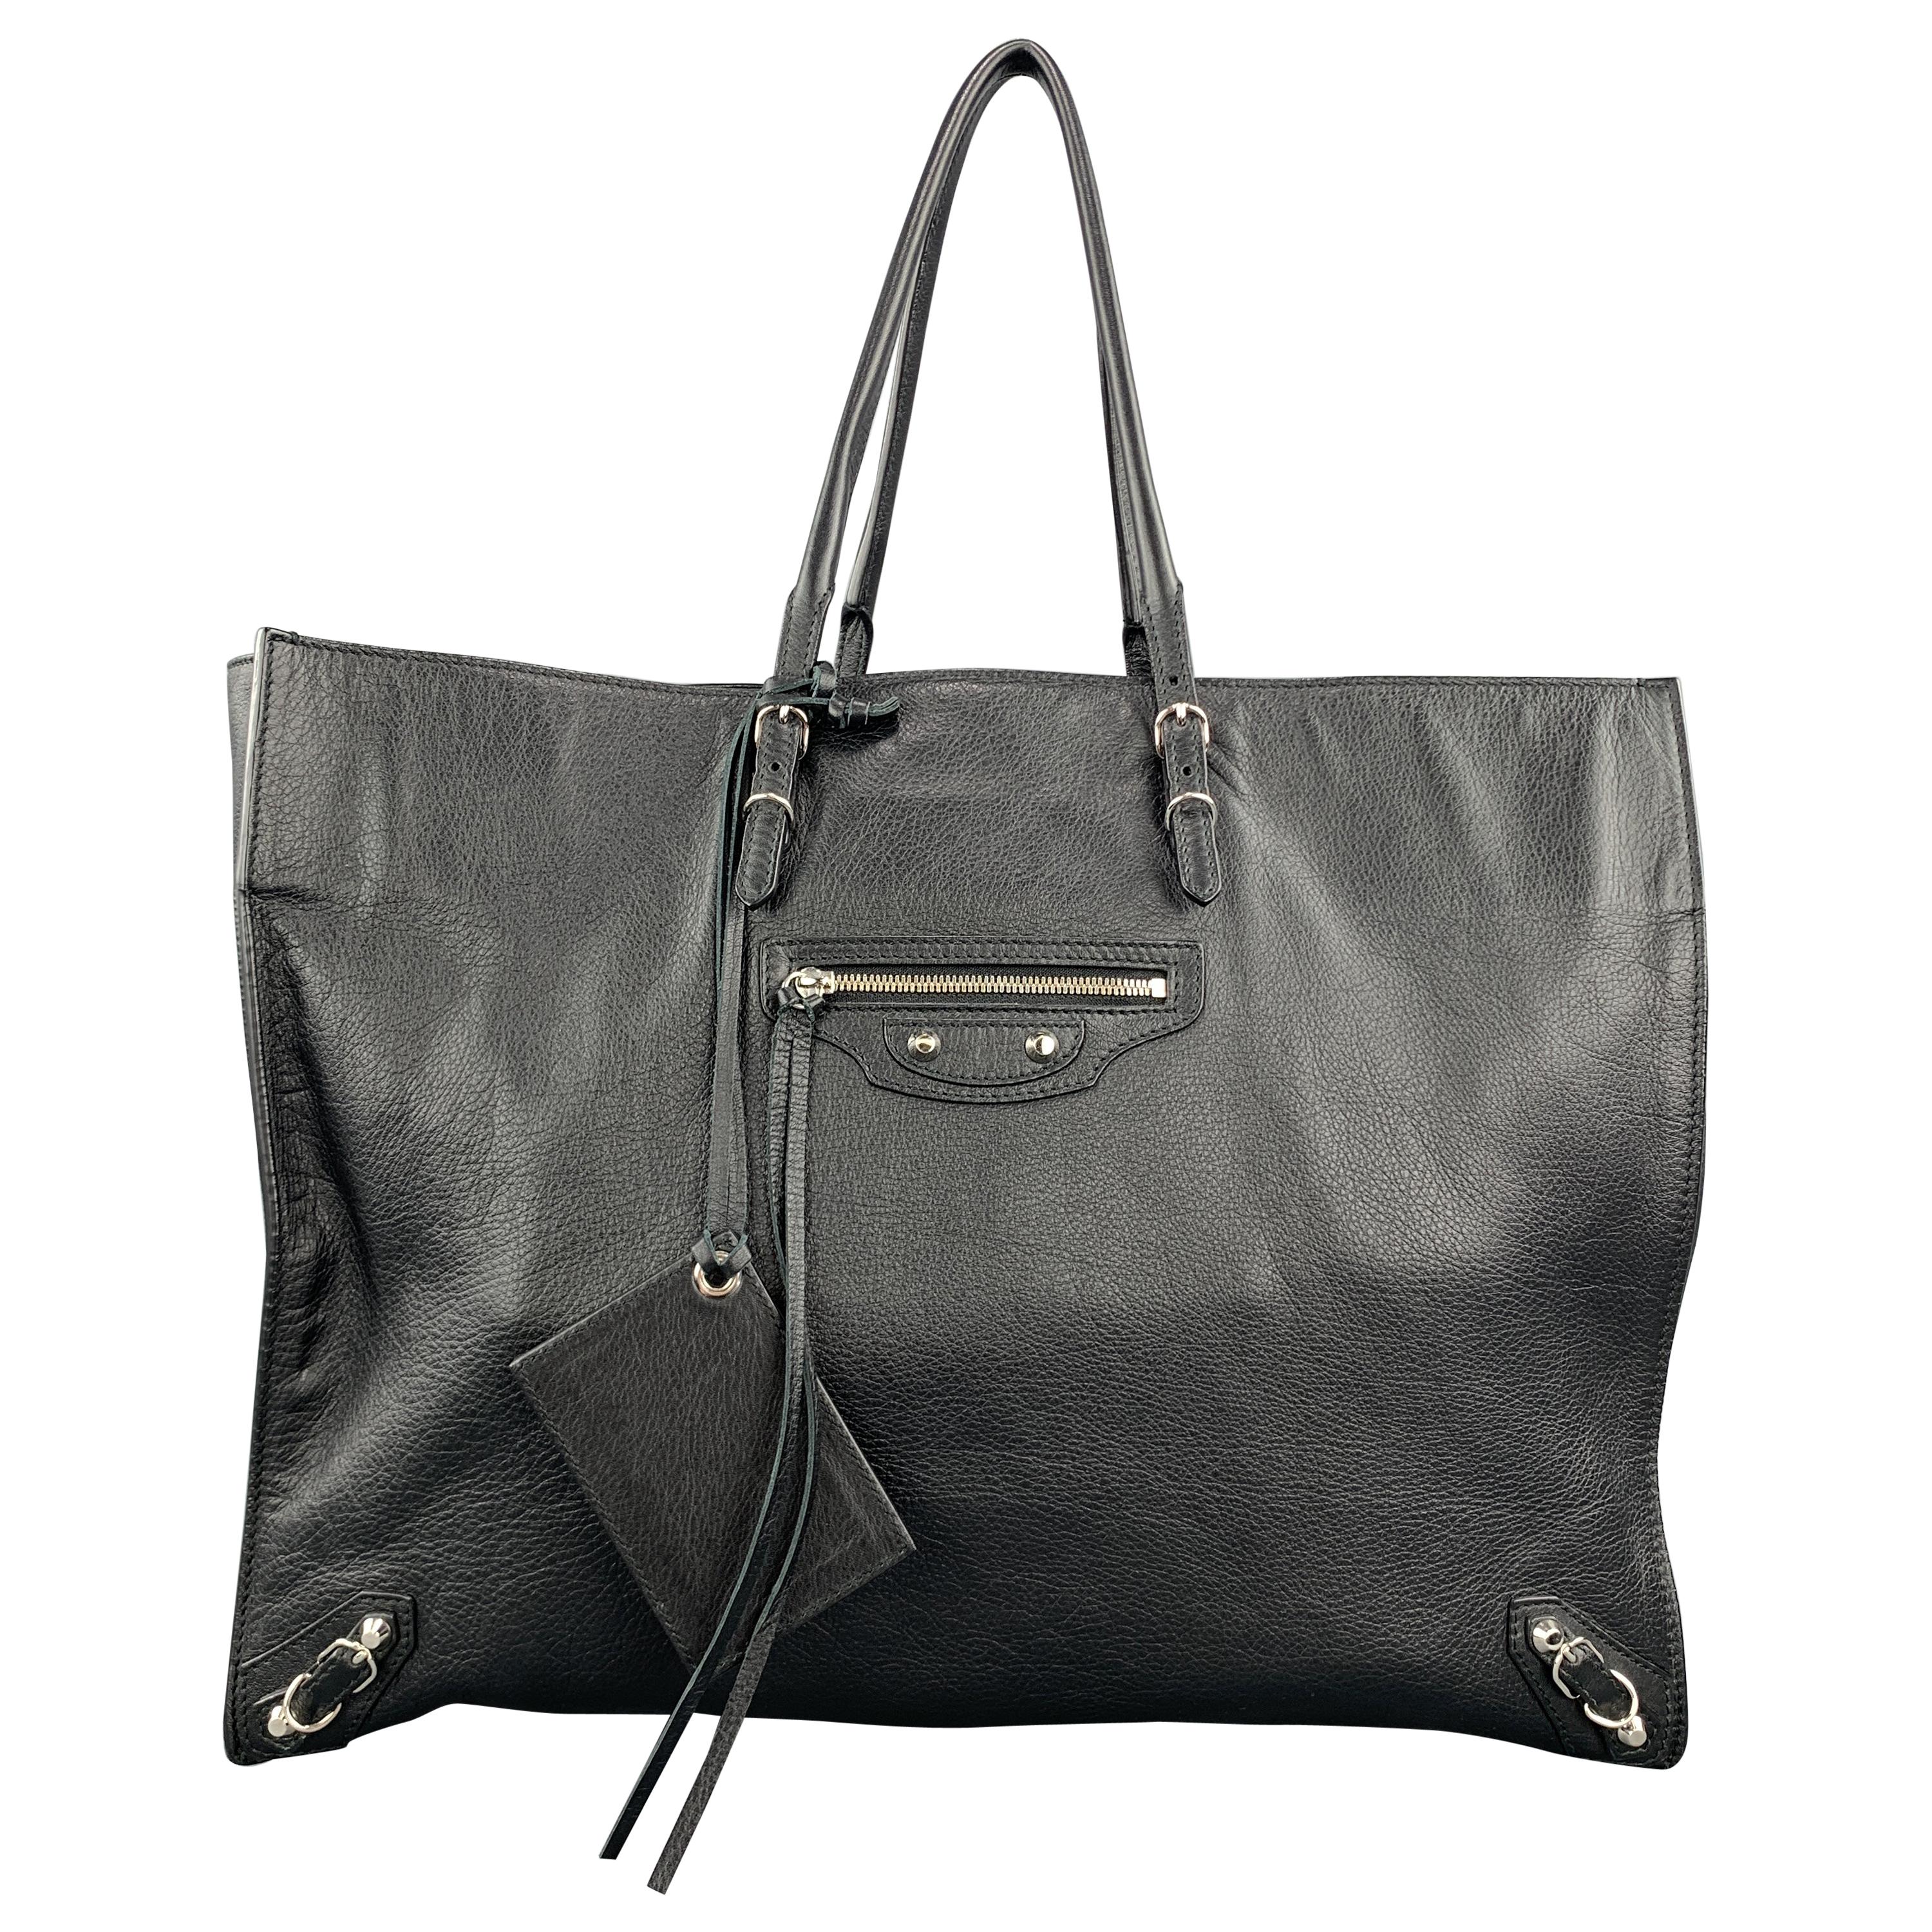 BALENCIAGA Black Leather Large CITY Tote Handbag